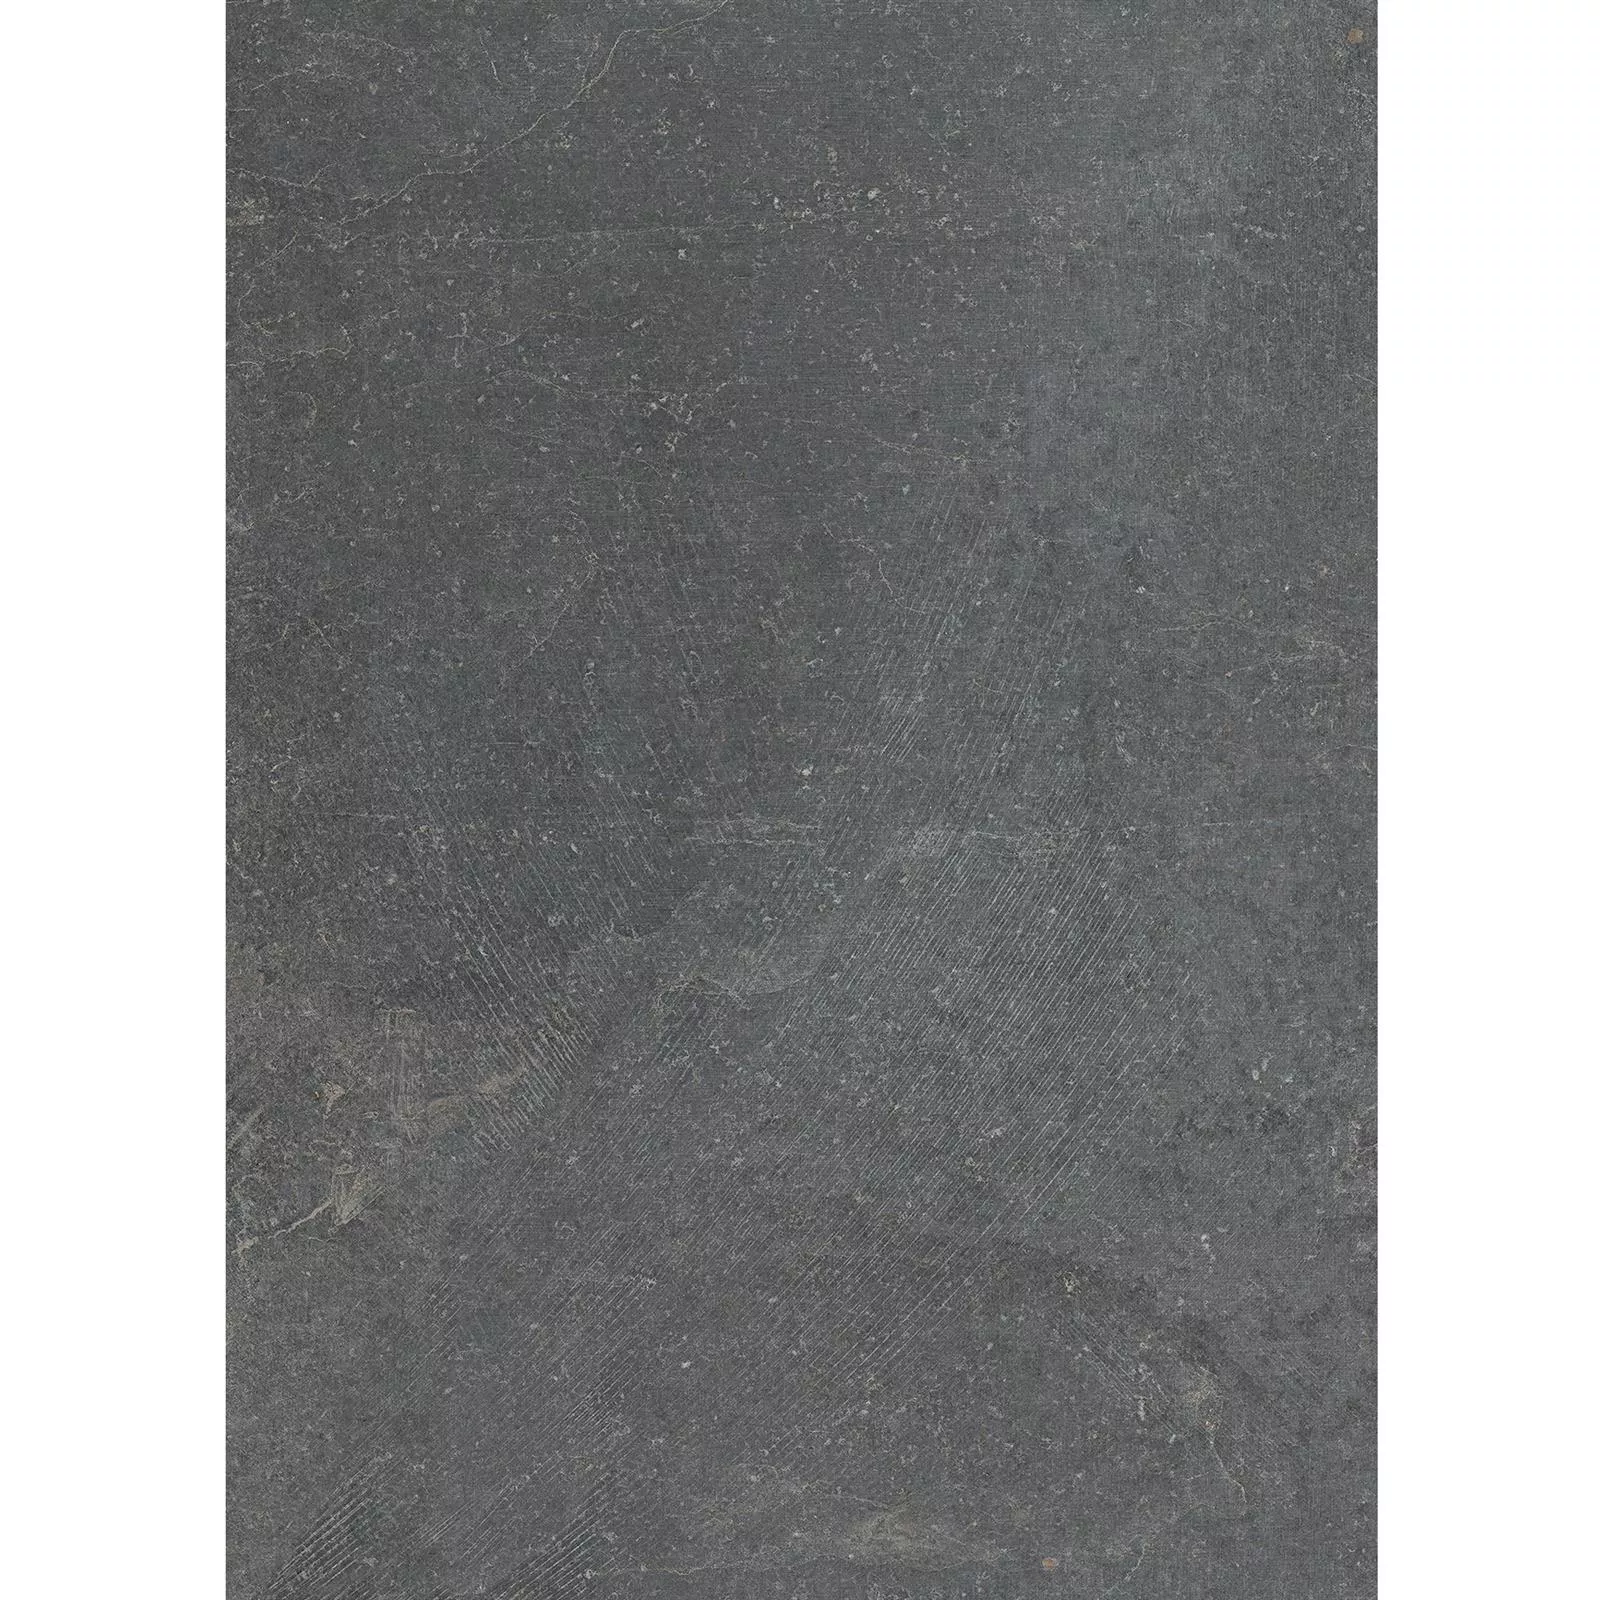 Muestra Pavimentos Aspecto de Piedra Horizon Antracita 60x120cm